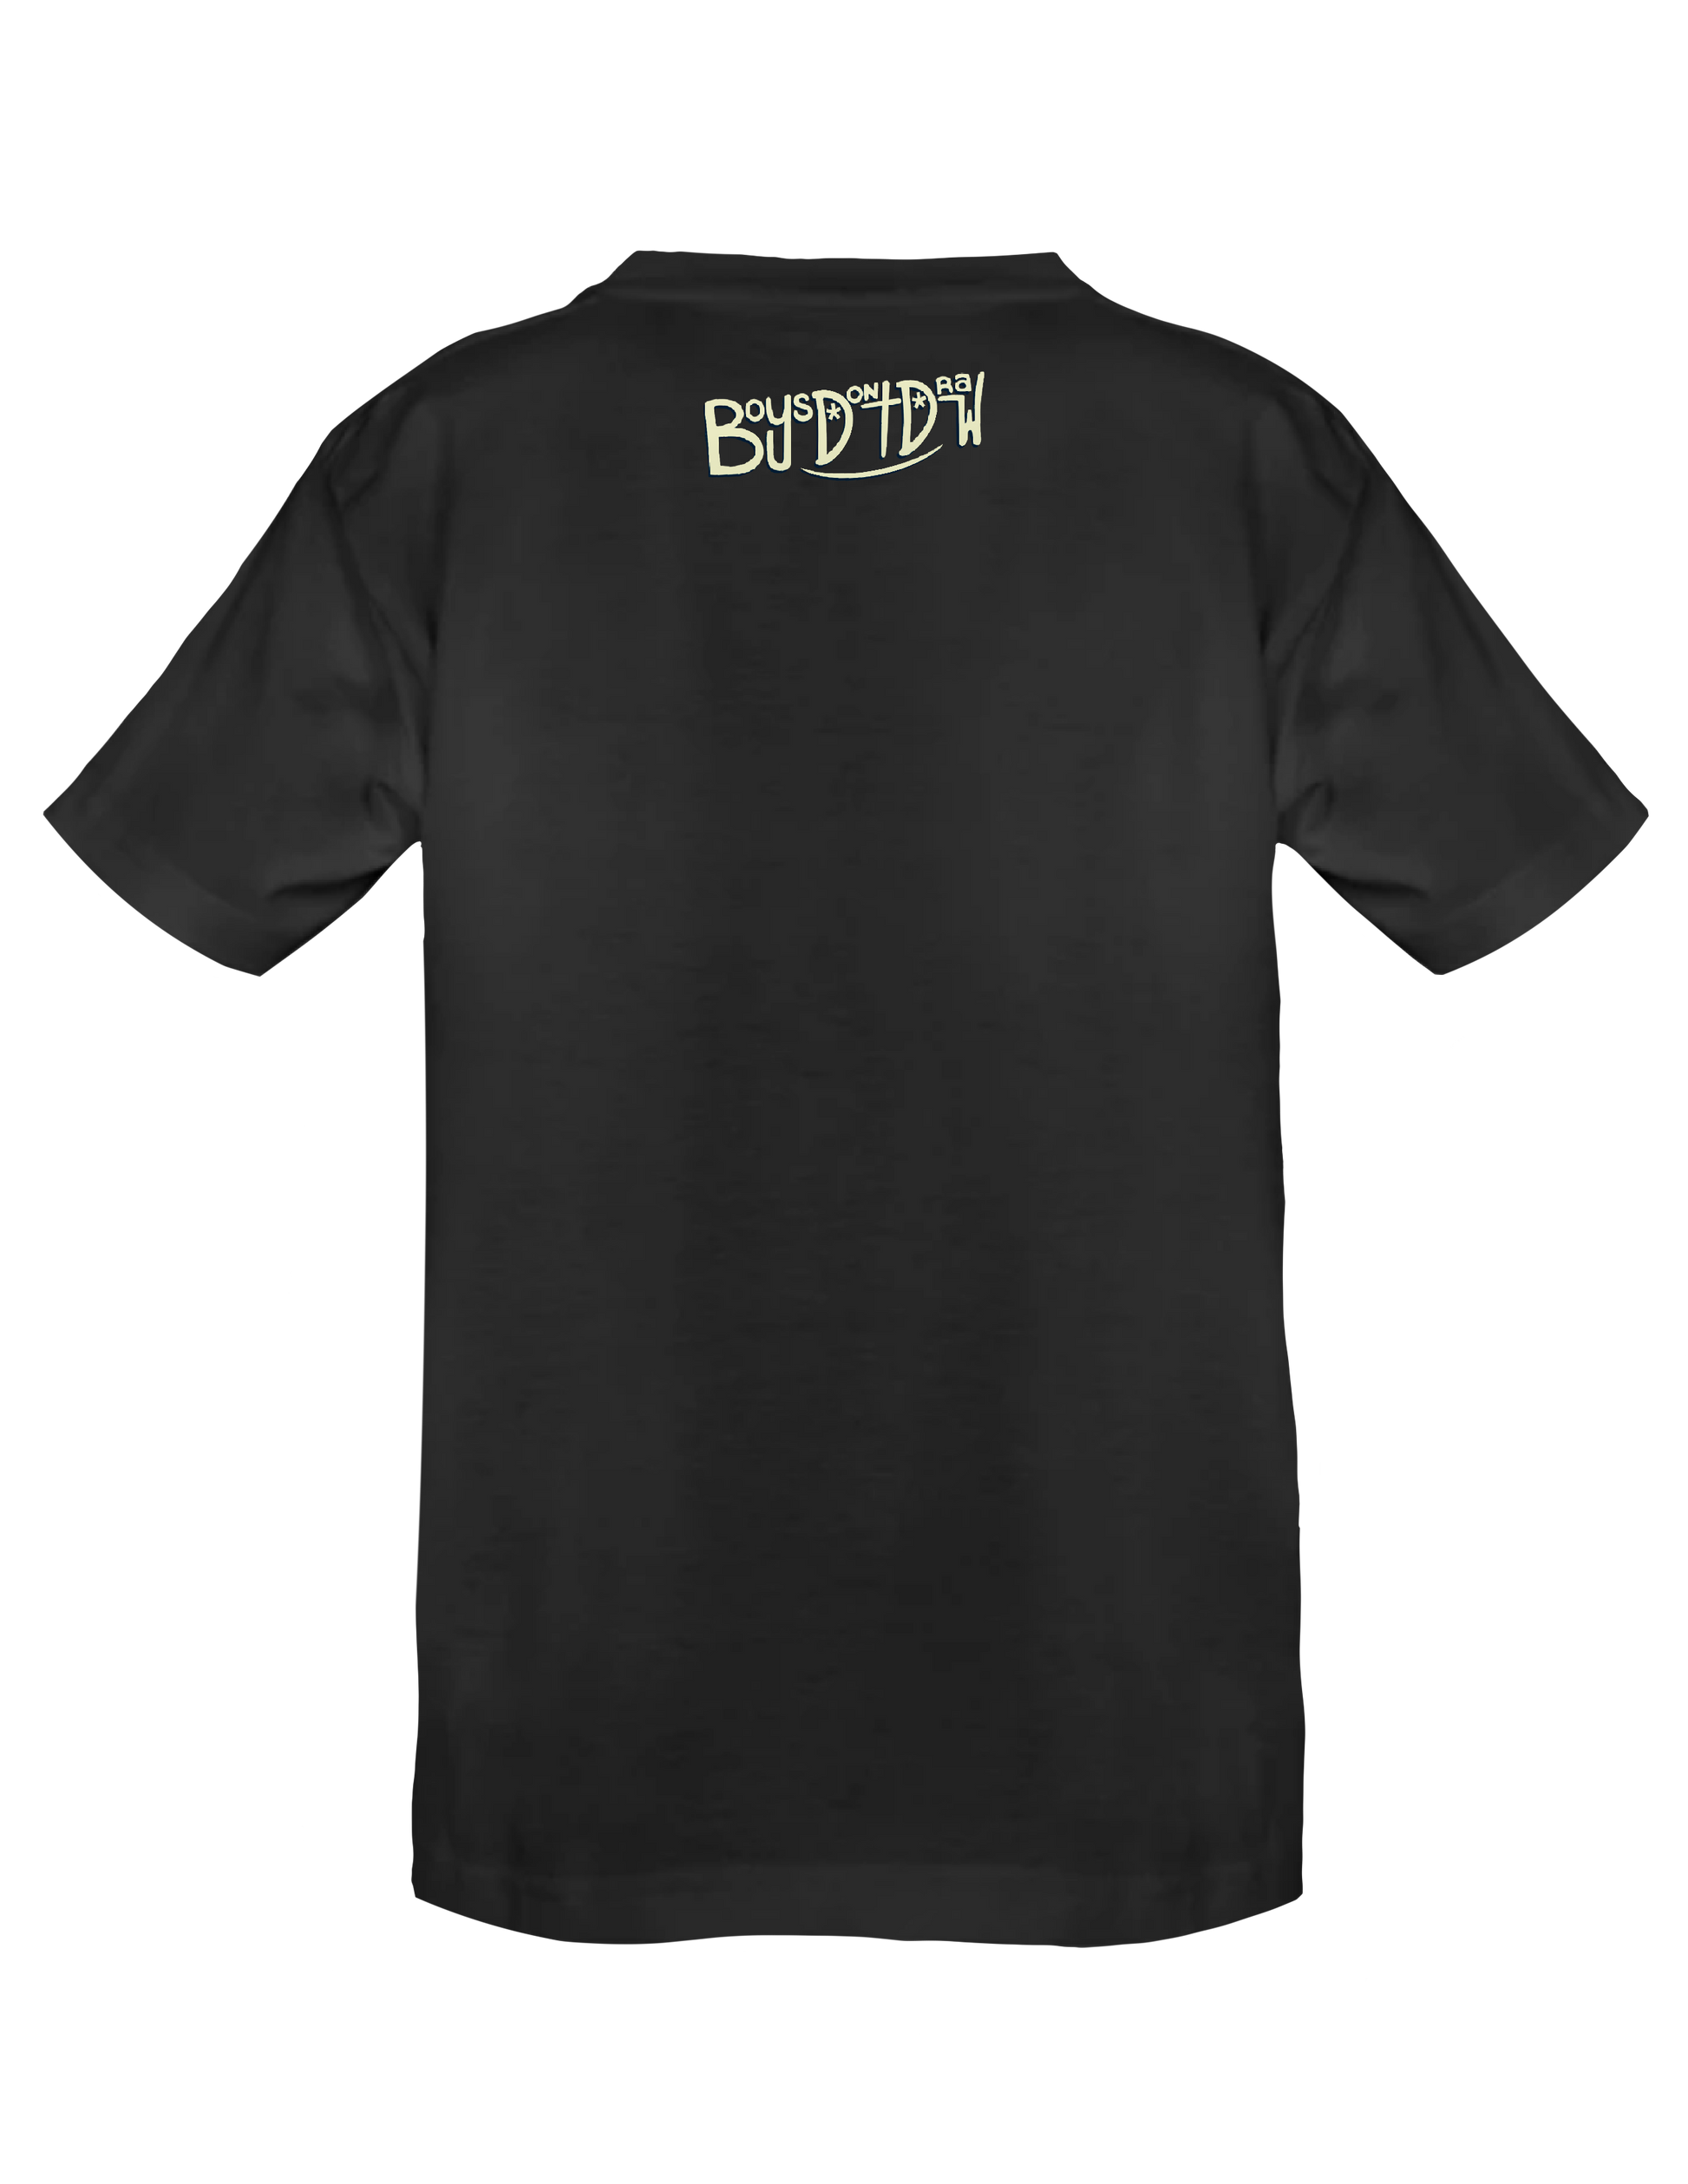 MIKE TYSON - IRON MIKE* (Black) - T-Shirt